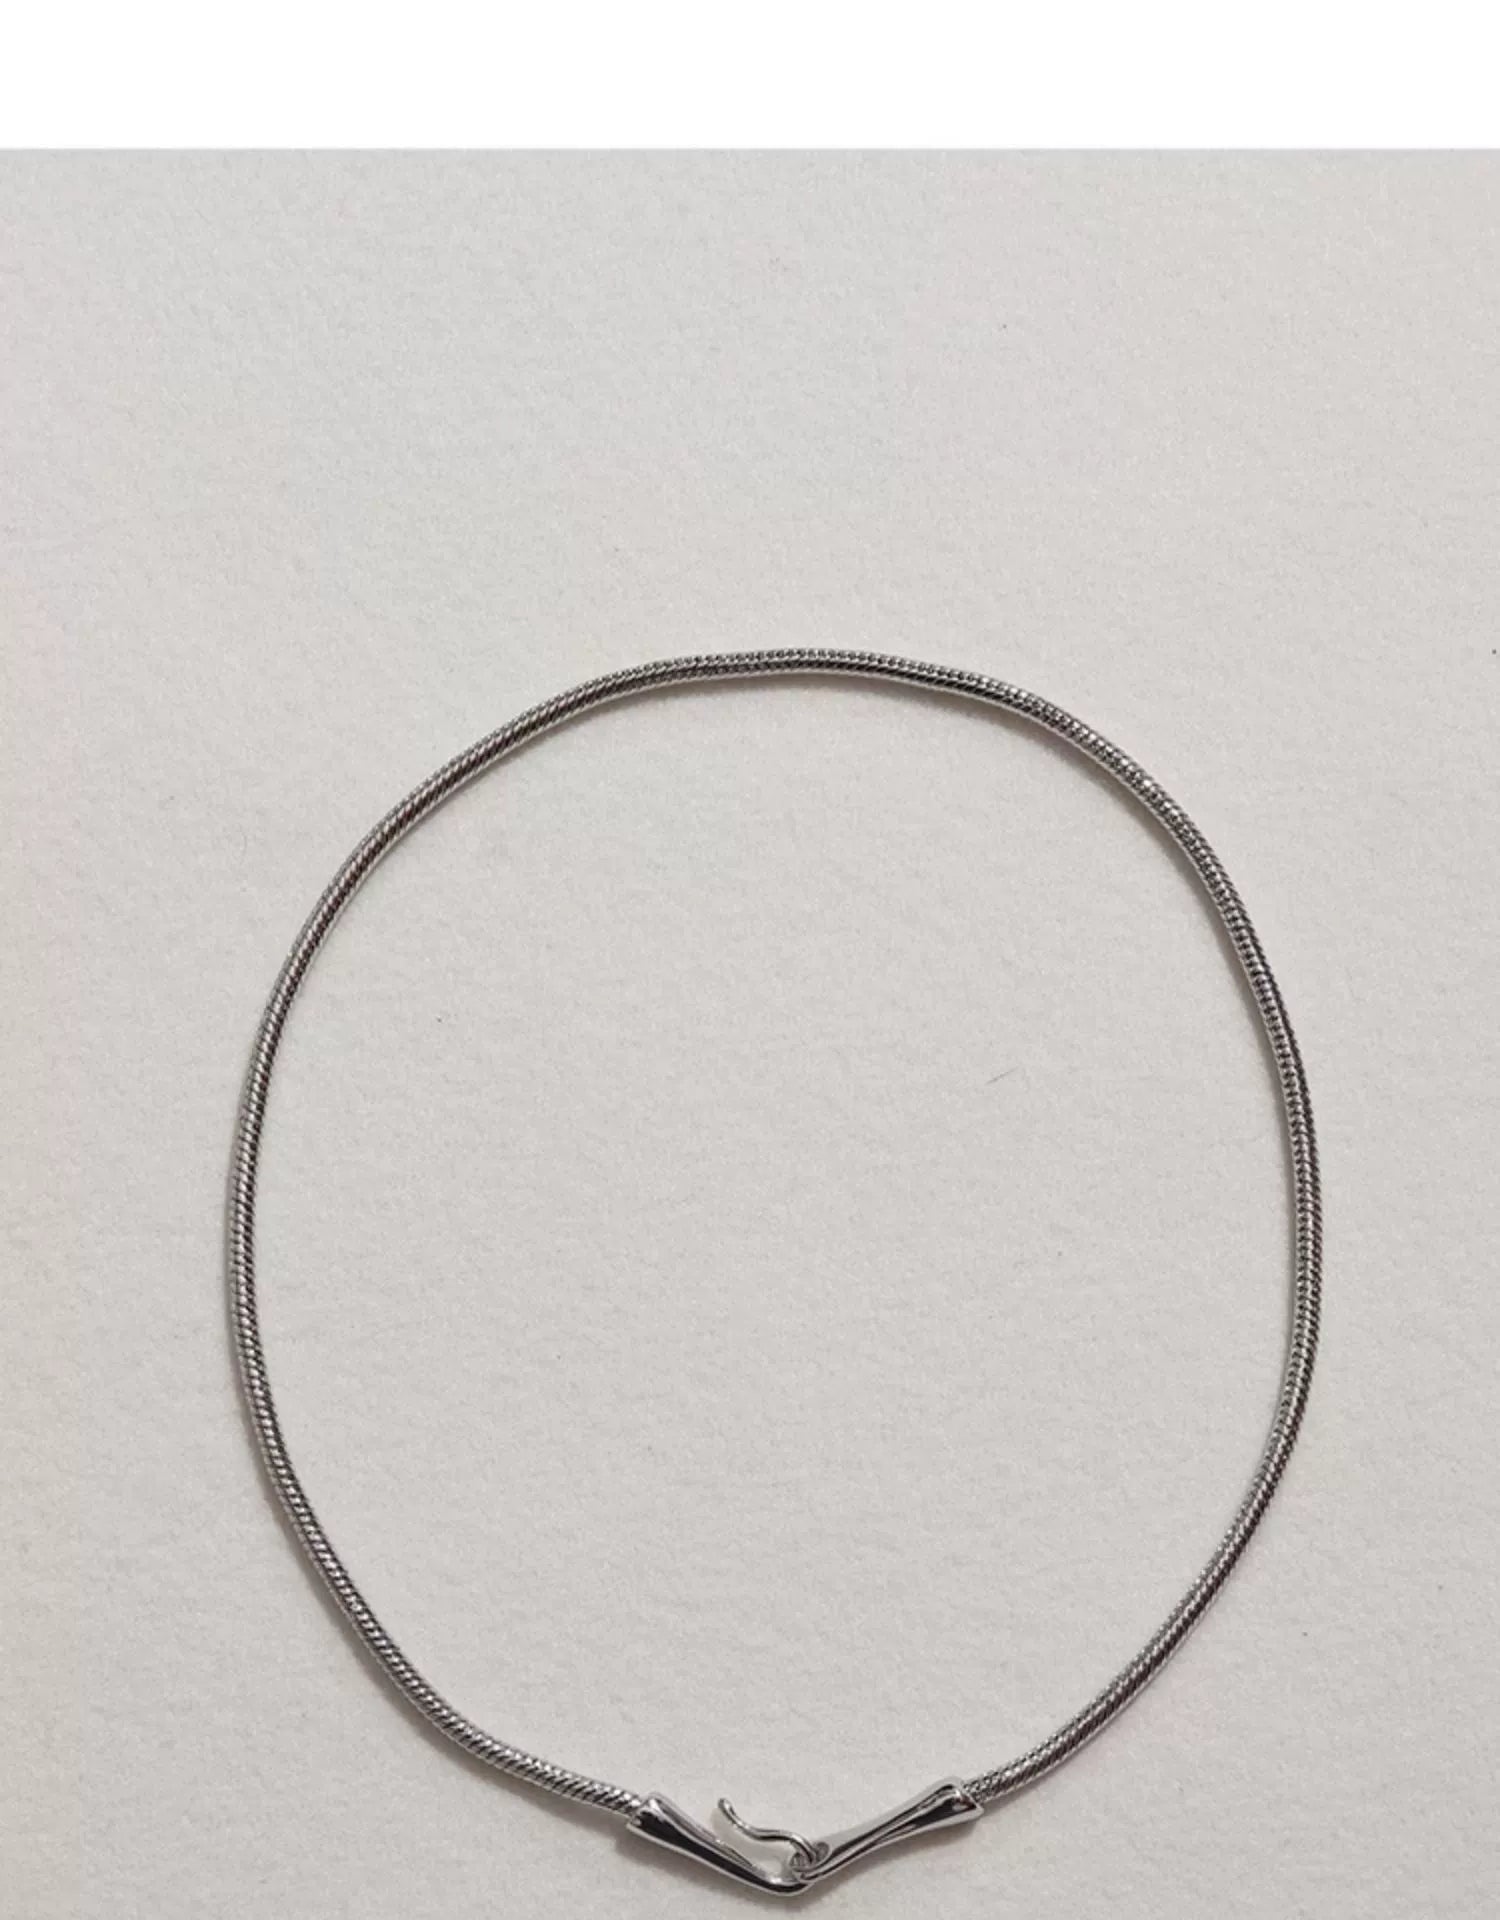 Hardware Hook Pendant Necklace Gold & Silver